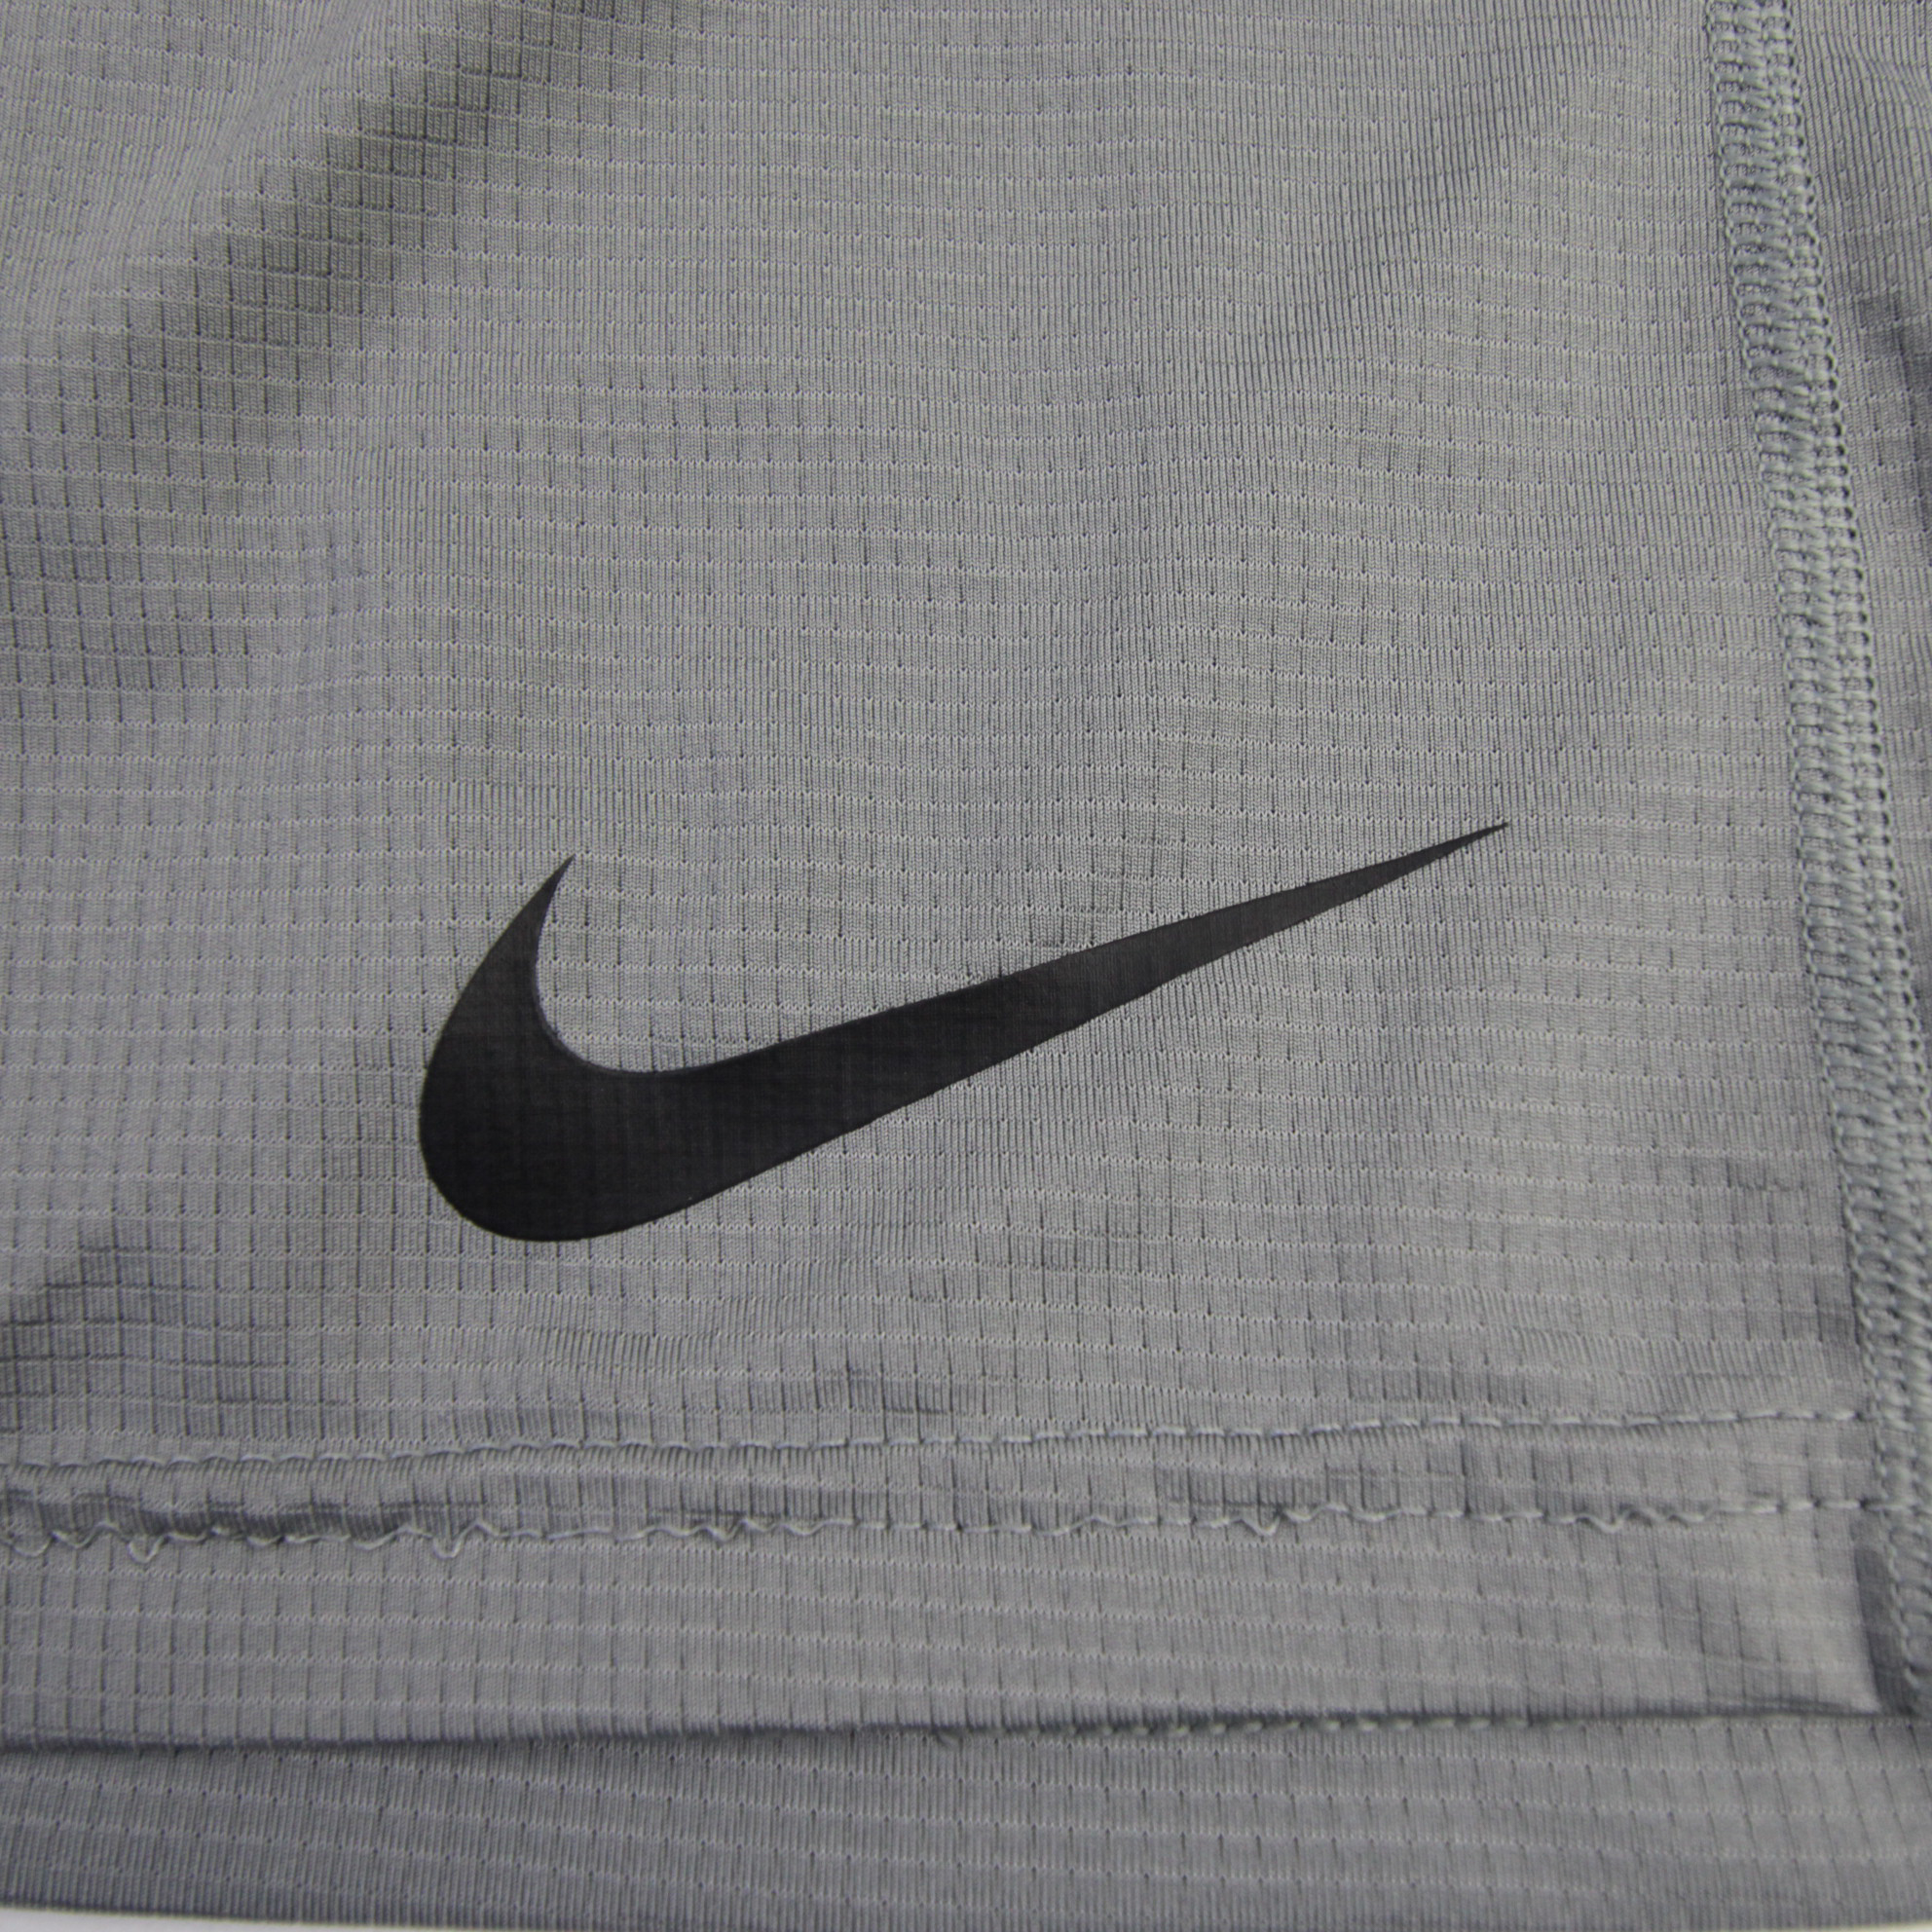 NIKE Nike COMP - Short de compression Homme grey - Private Sport Shop